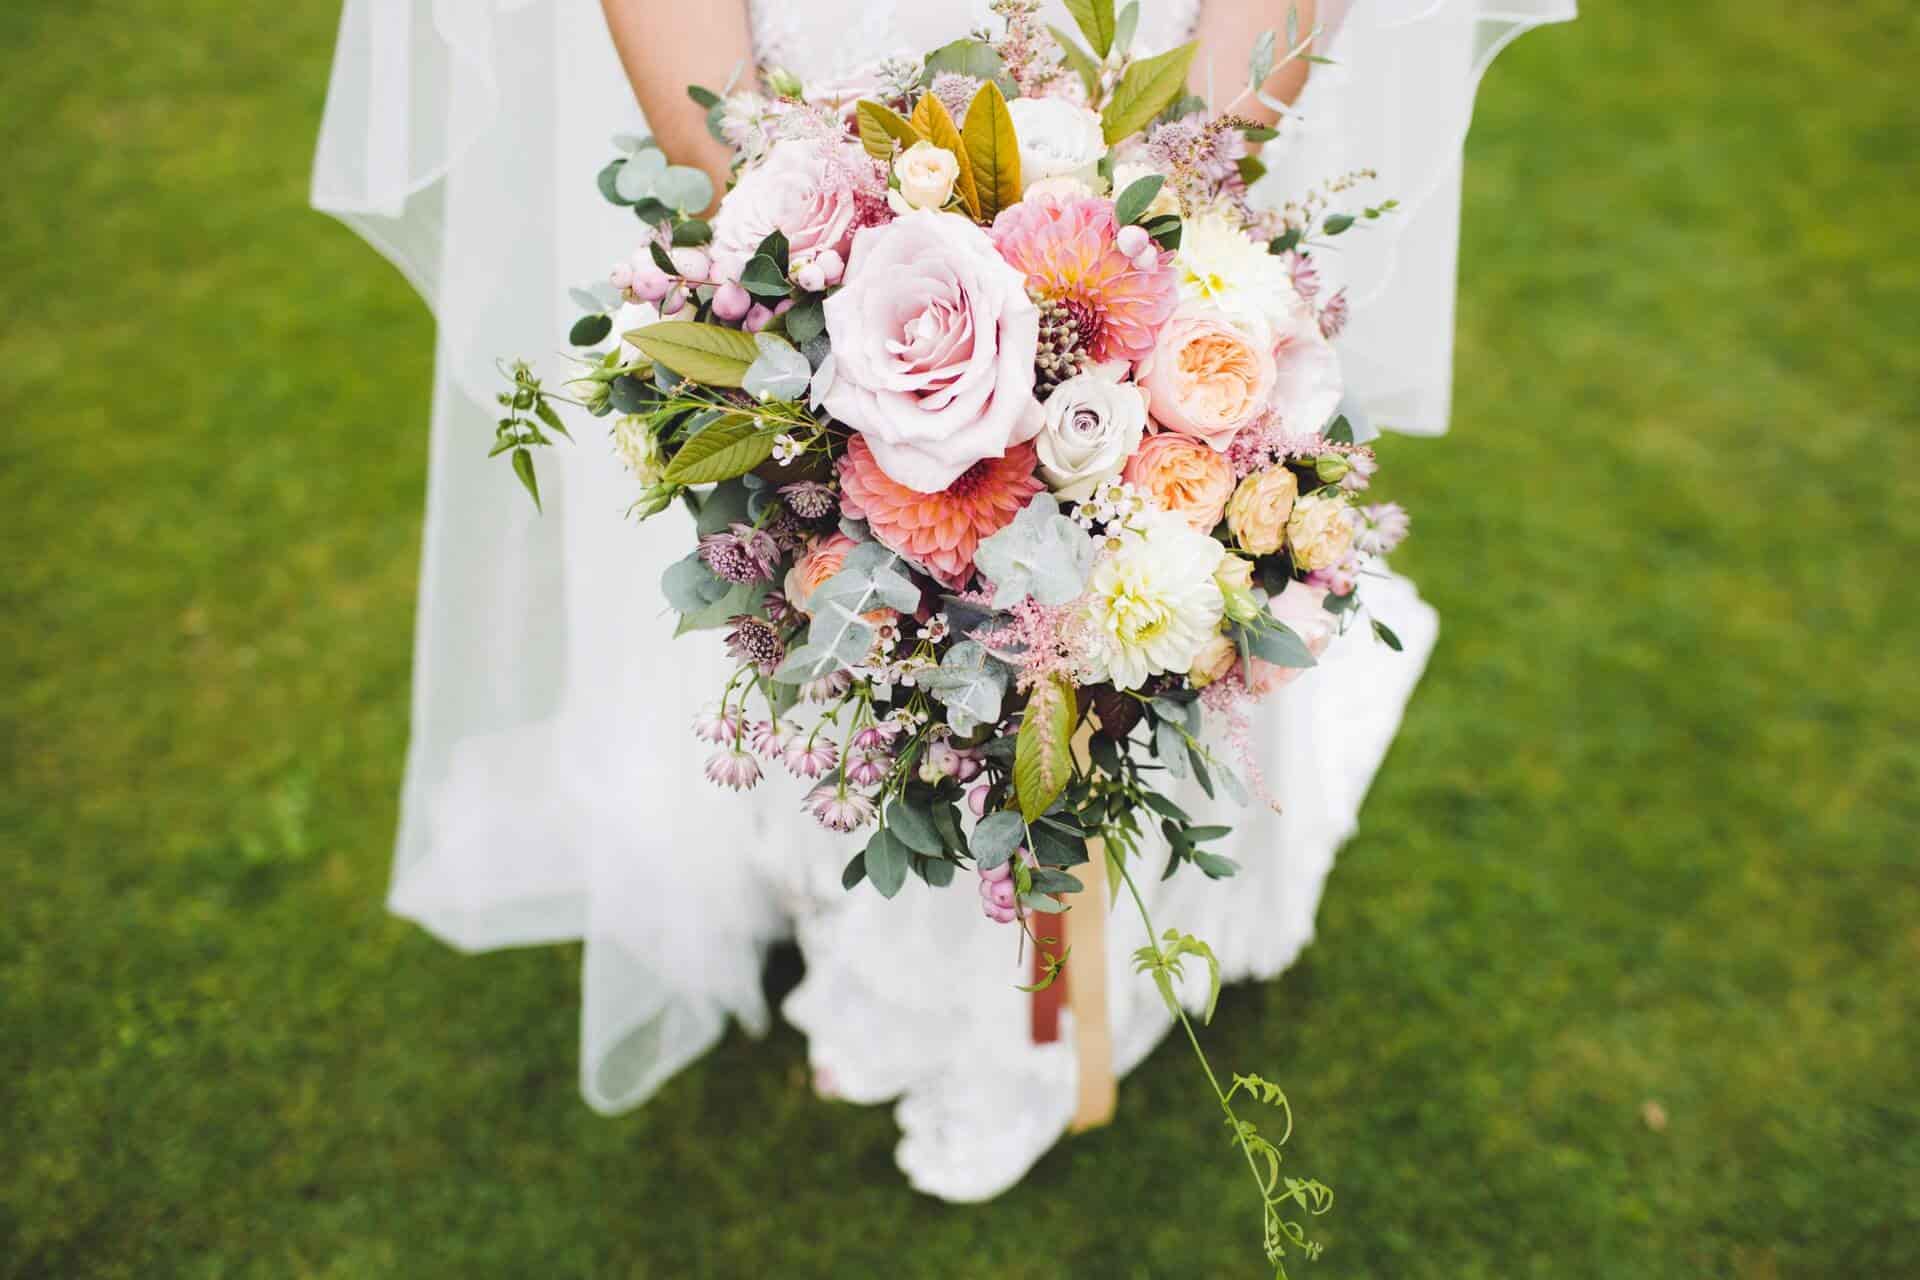 Popular Flowers For Weddings - Best Wedding Flower Arrangements